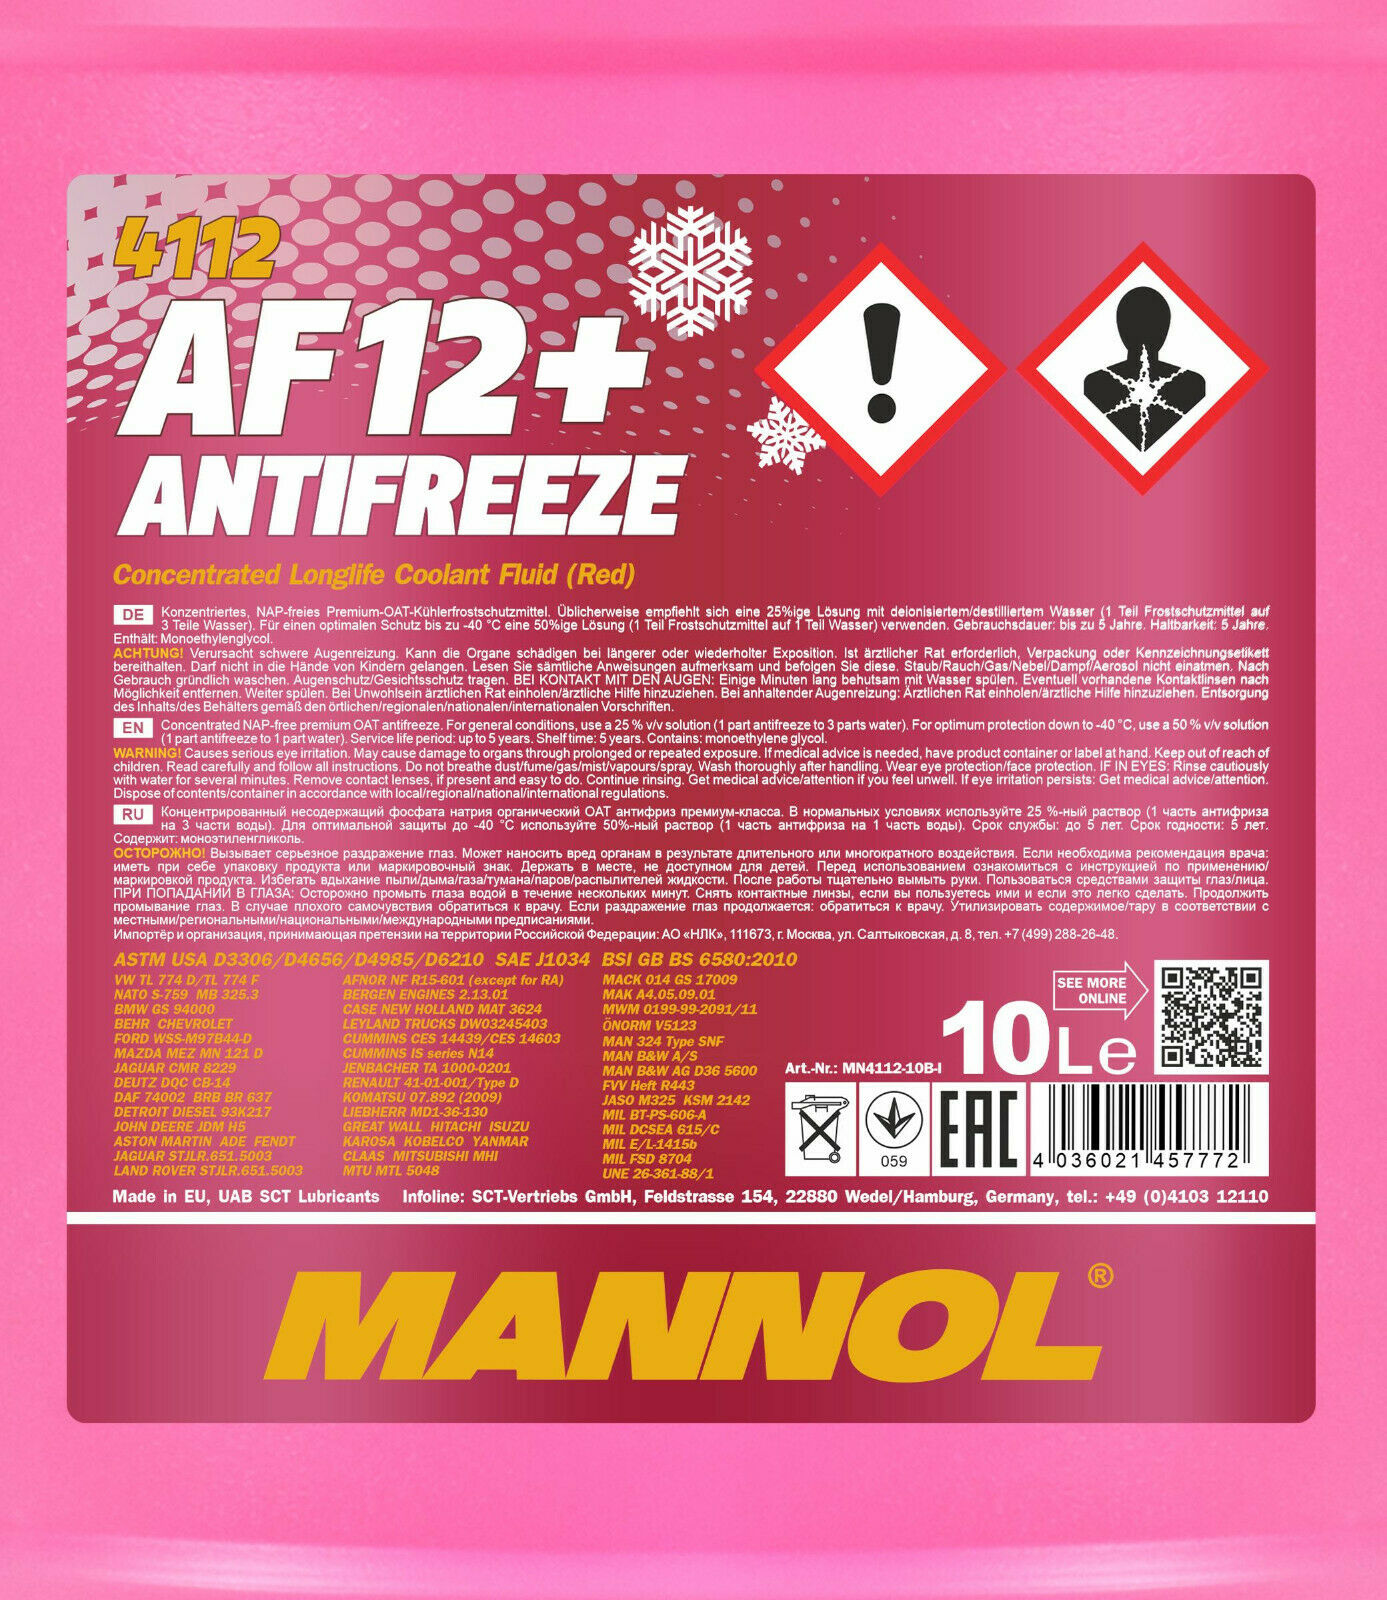 40L (4x10) MANNOL 4112 Longlife Antifreeze AF12+ Kühlerfrostschutz Konzentrat rot 4x10L